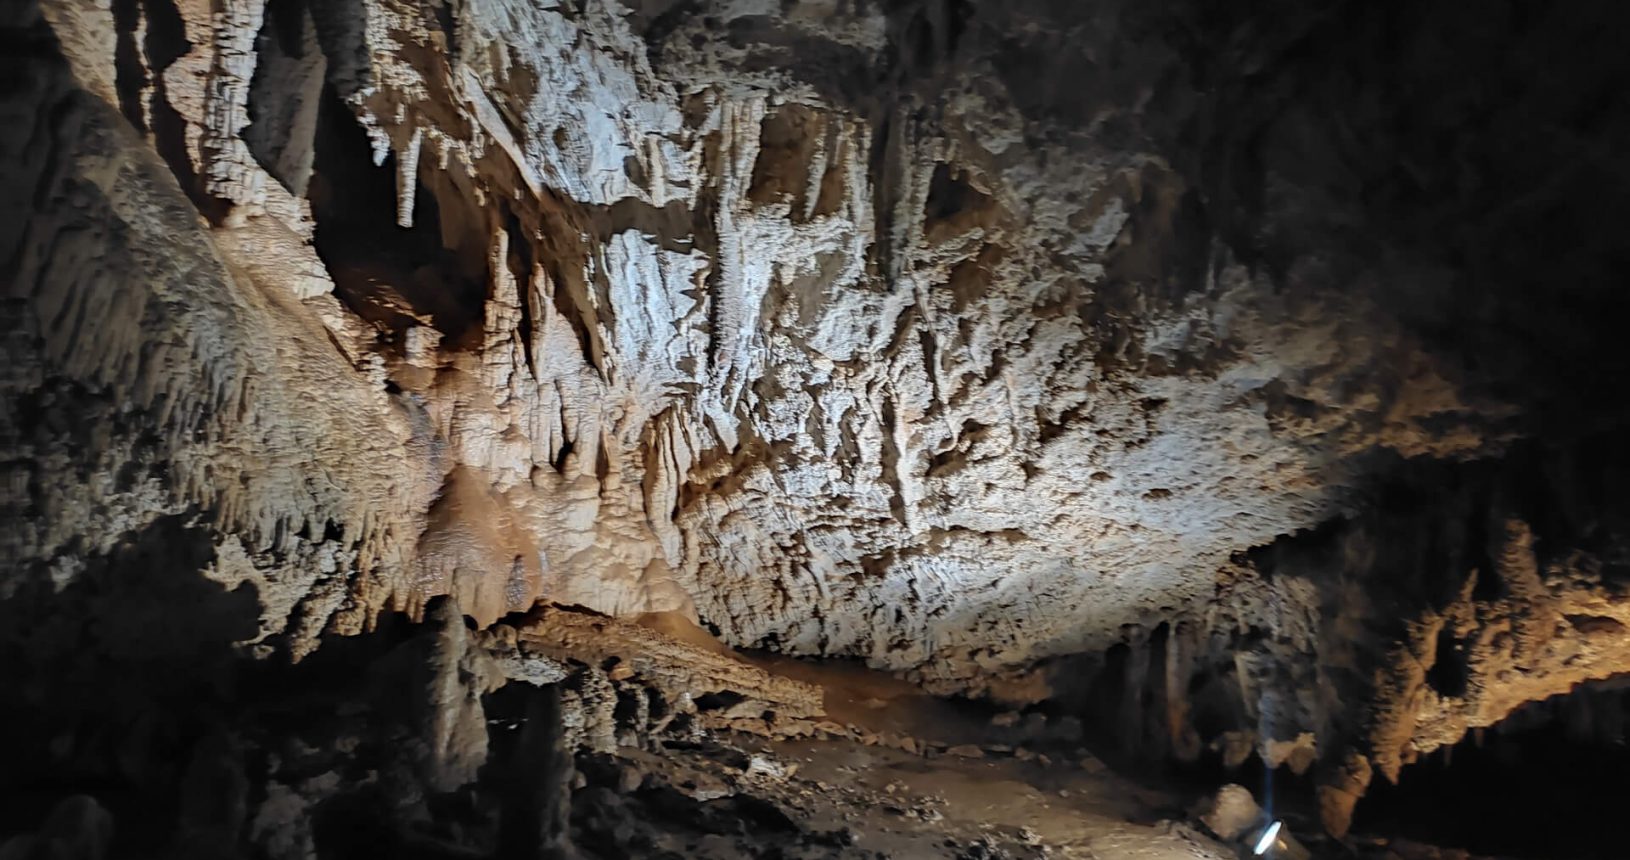 In dark corners of Lipa Cave